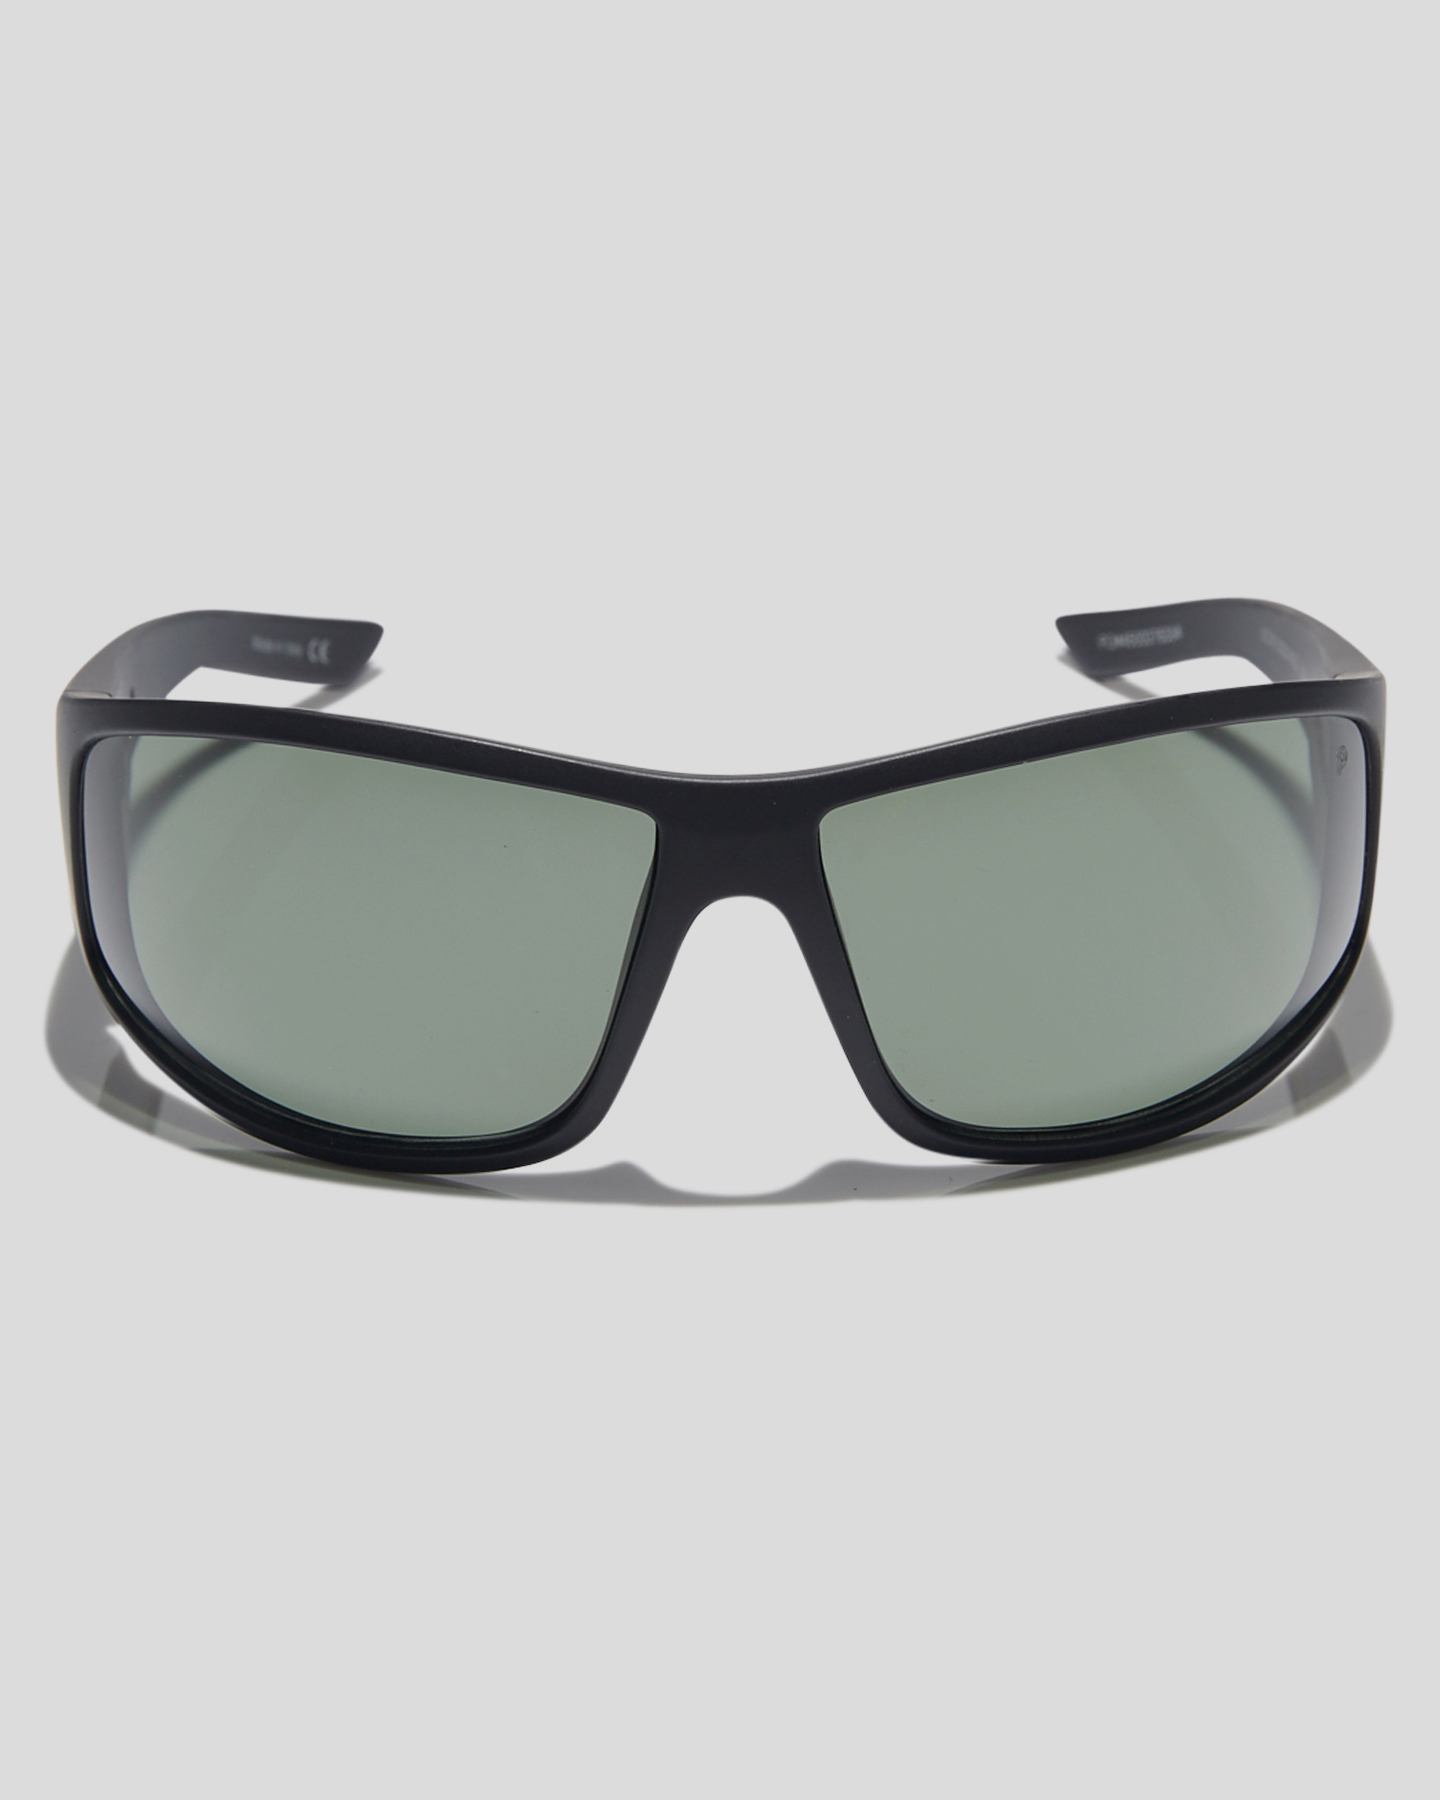 Quiksilver Akdk Polarised Floatable Sunglasses - Matt Black Grn Polar |  SurfStitch